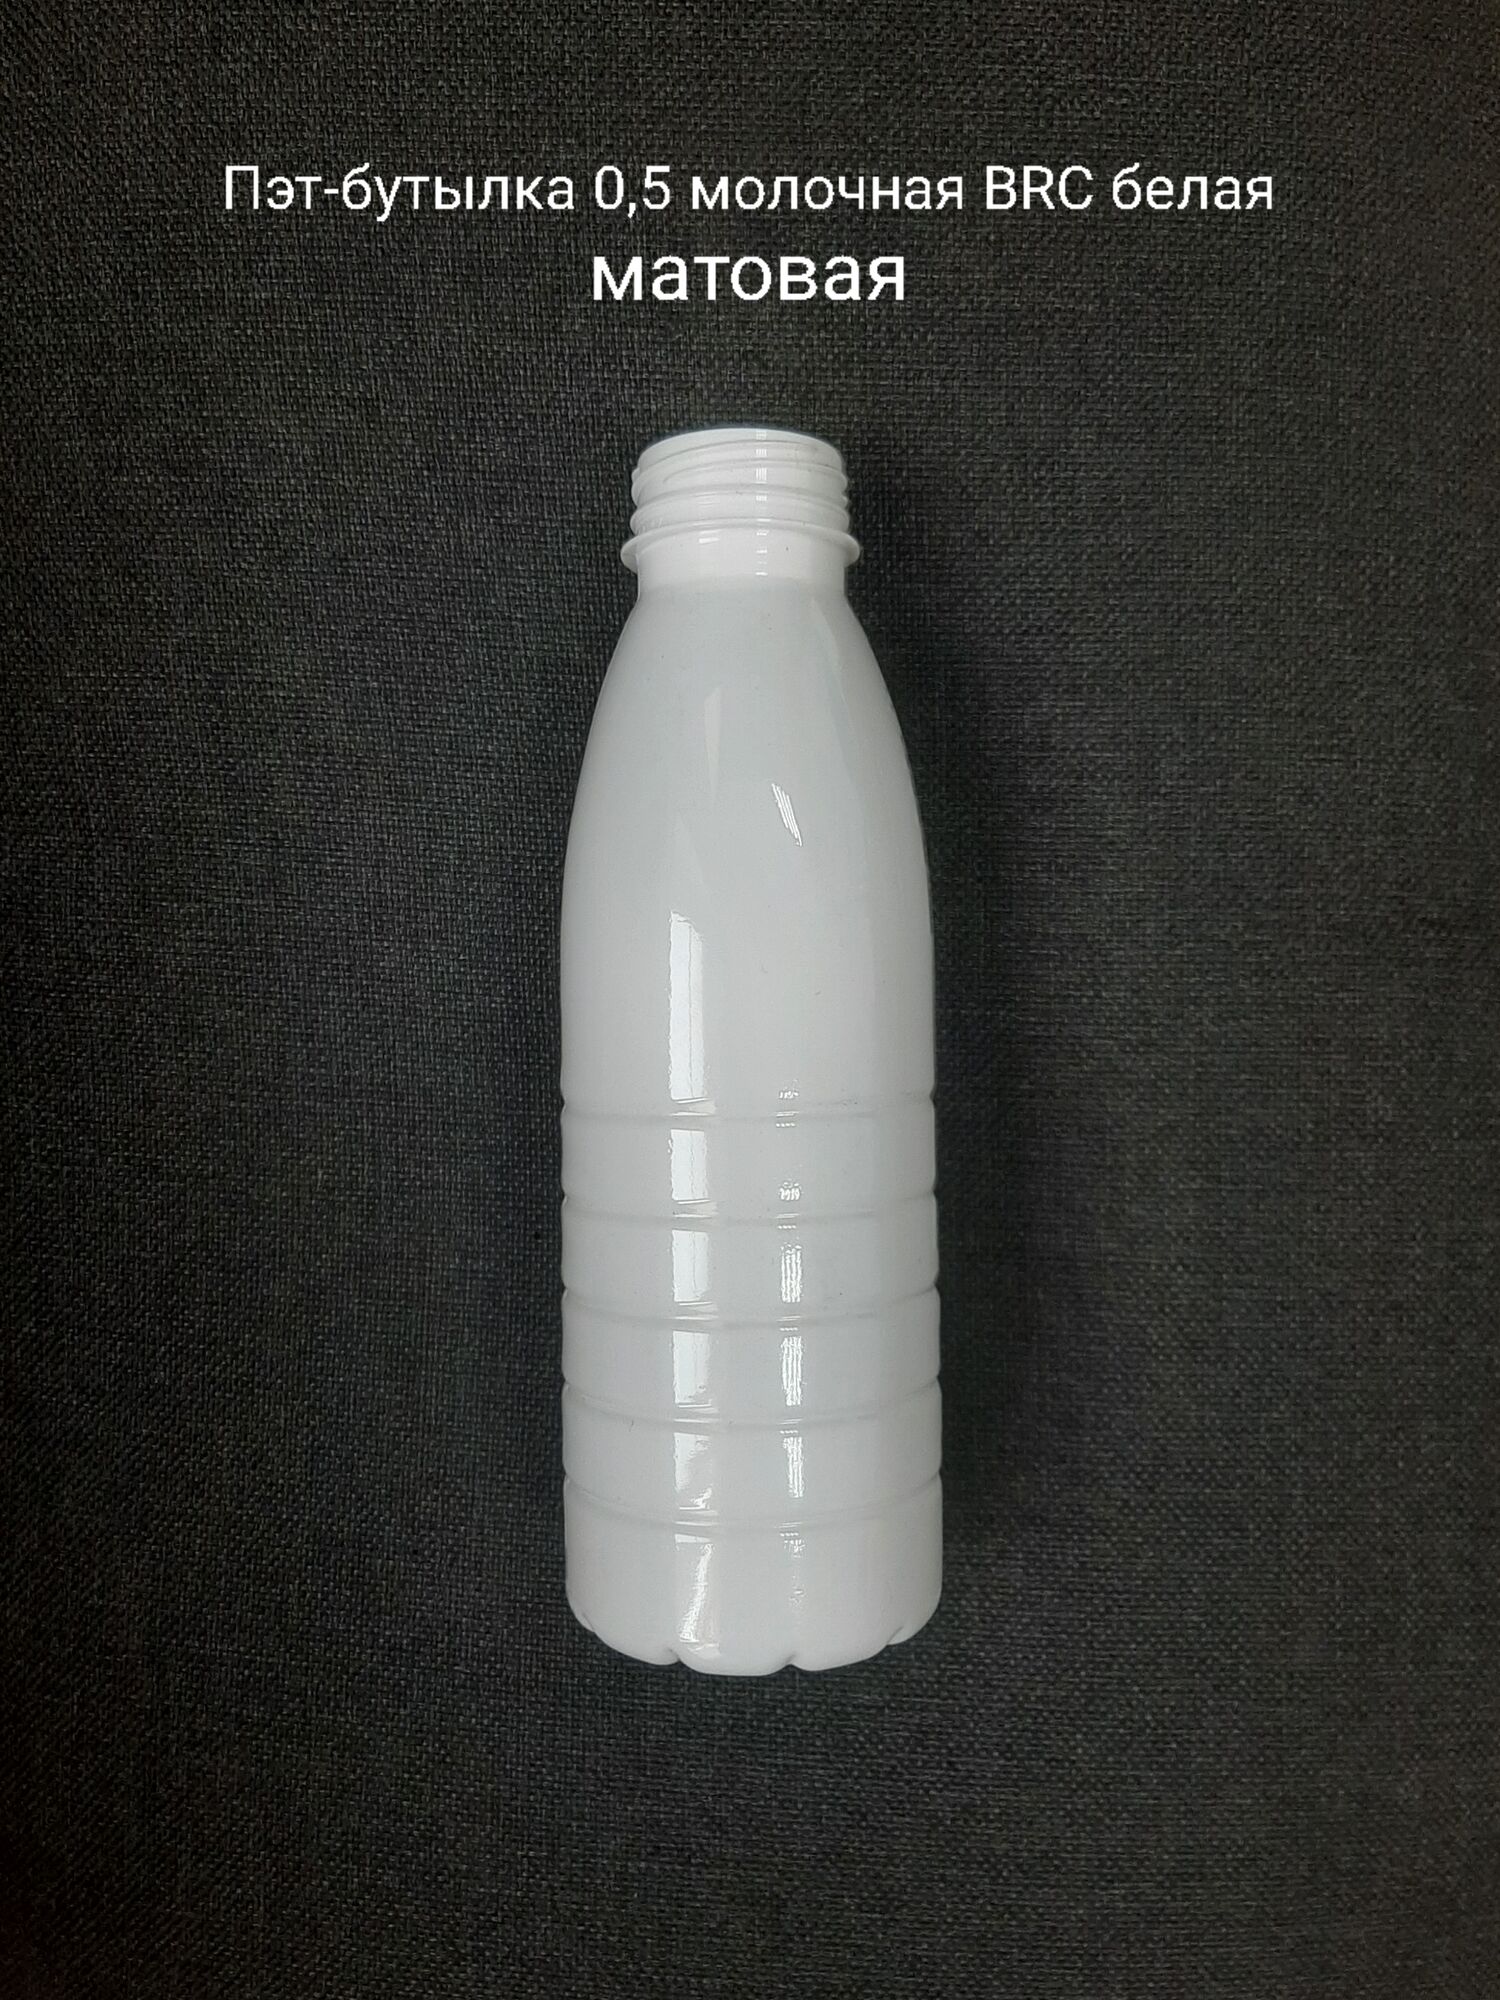 Пэт-бутылка 0,5 молочная BRC,белая - матовая (200 шт в упаковке) вес 25,5 гр